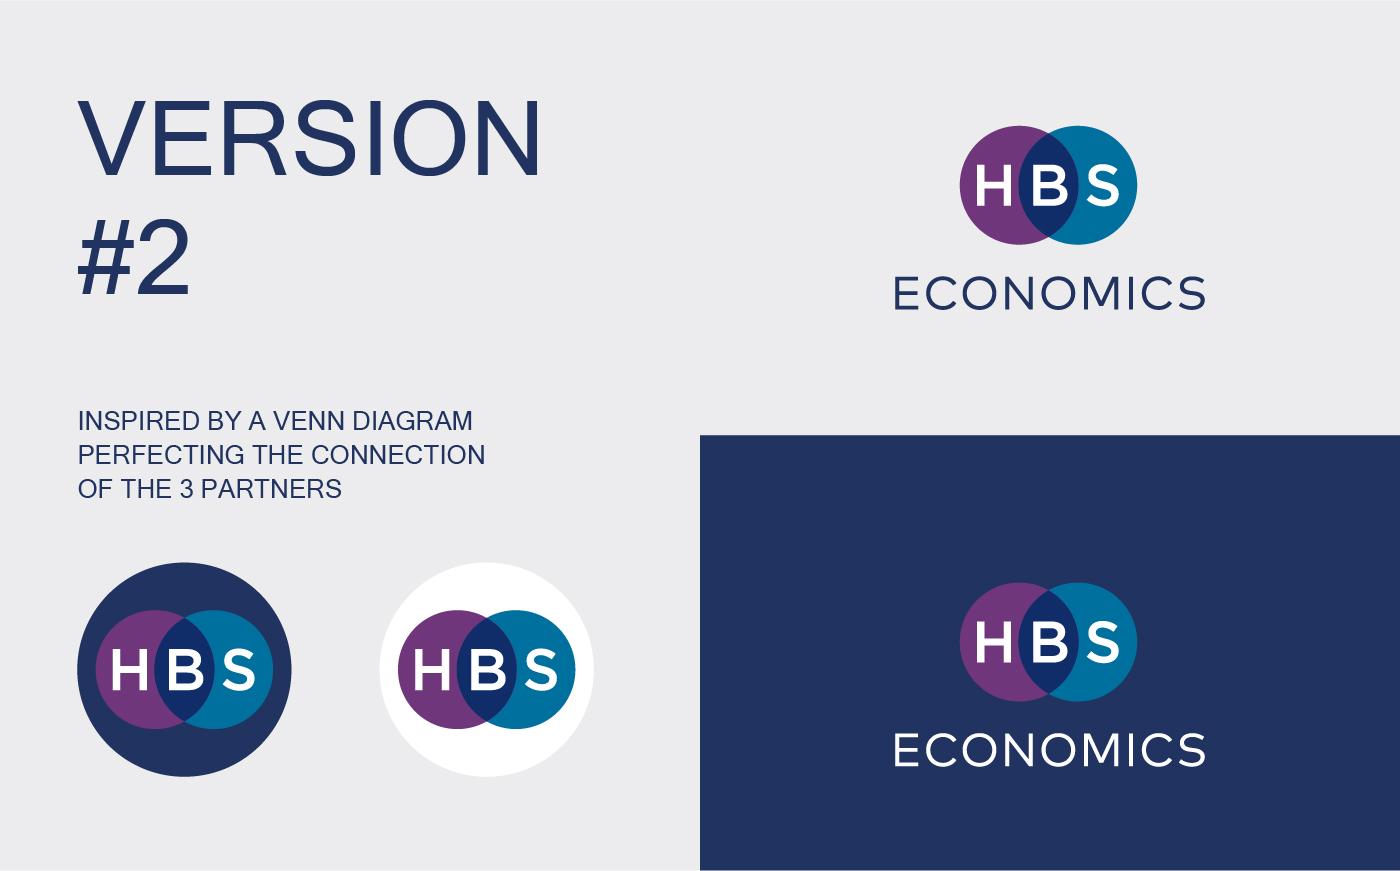 HBS Economic new logo version 2